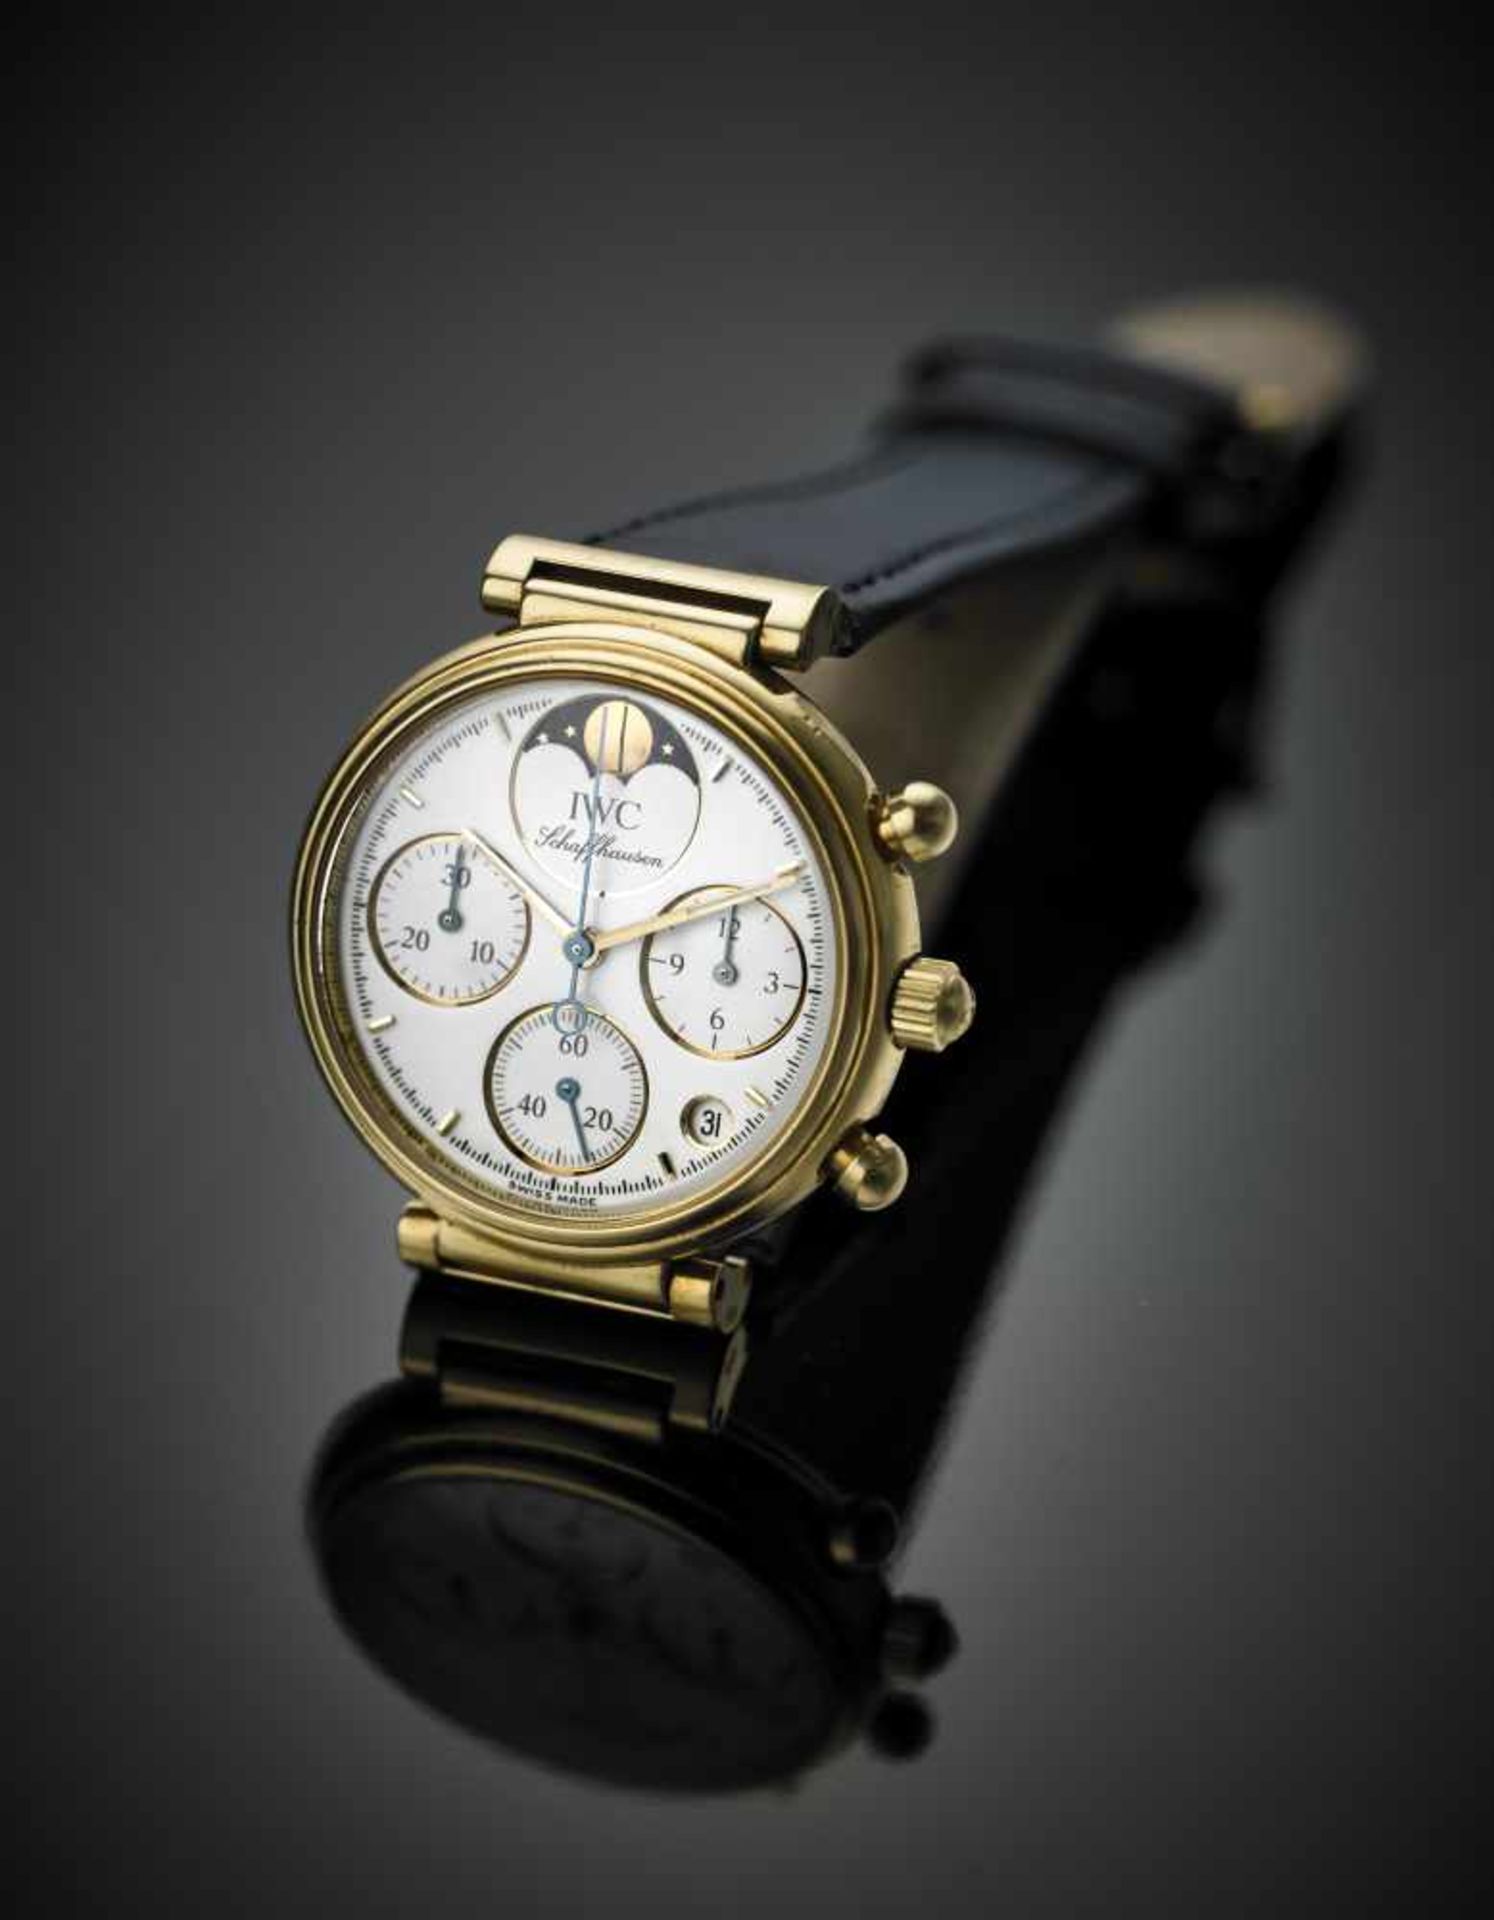 IWC DA VINCILady's 18K gold wristwatch1990sDial signedQuartz movementWhite dial with indexes - Bild 2 aus 2